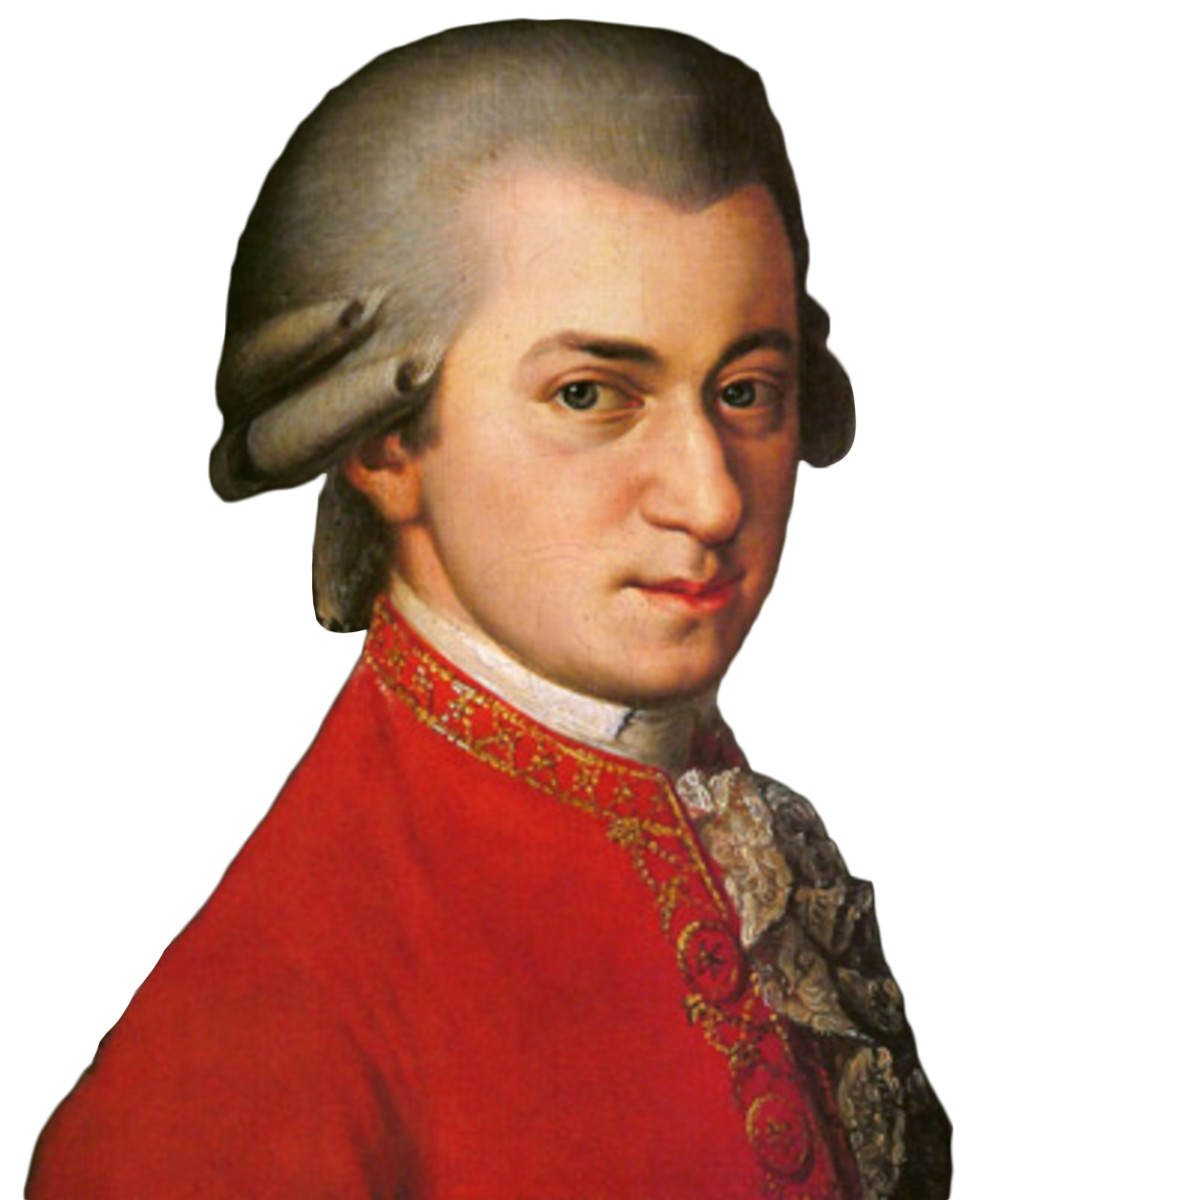 Painted portrait of Wolfgang Amadeus Mozart